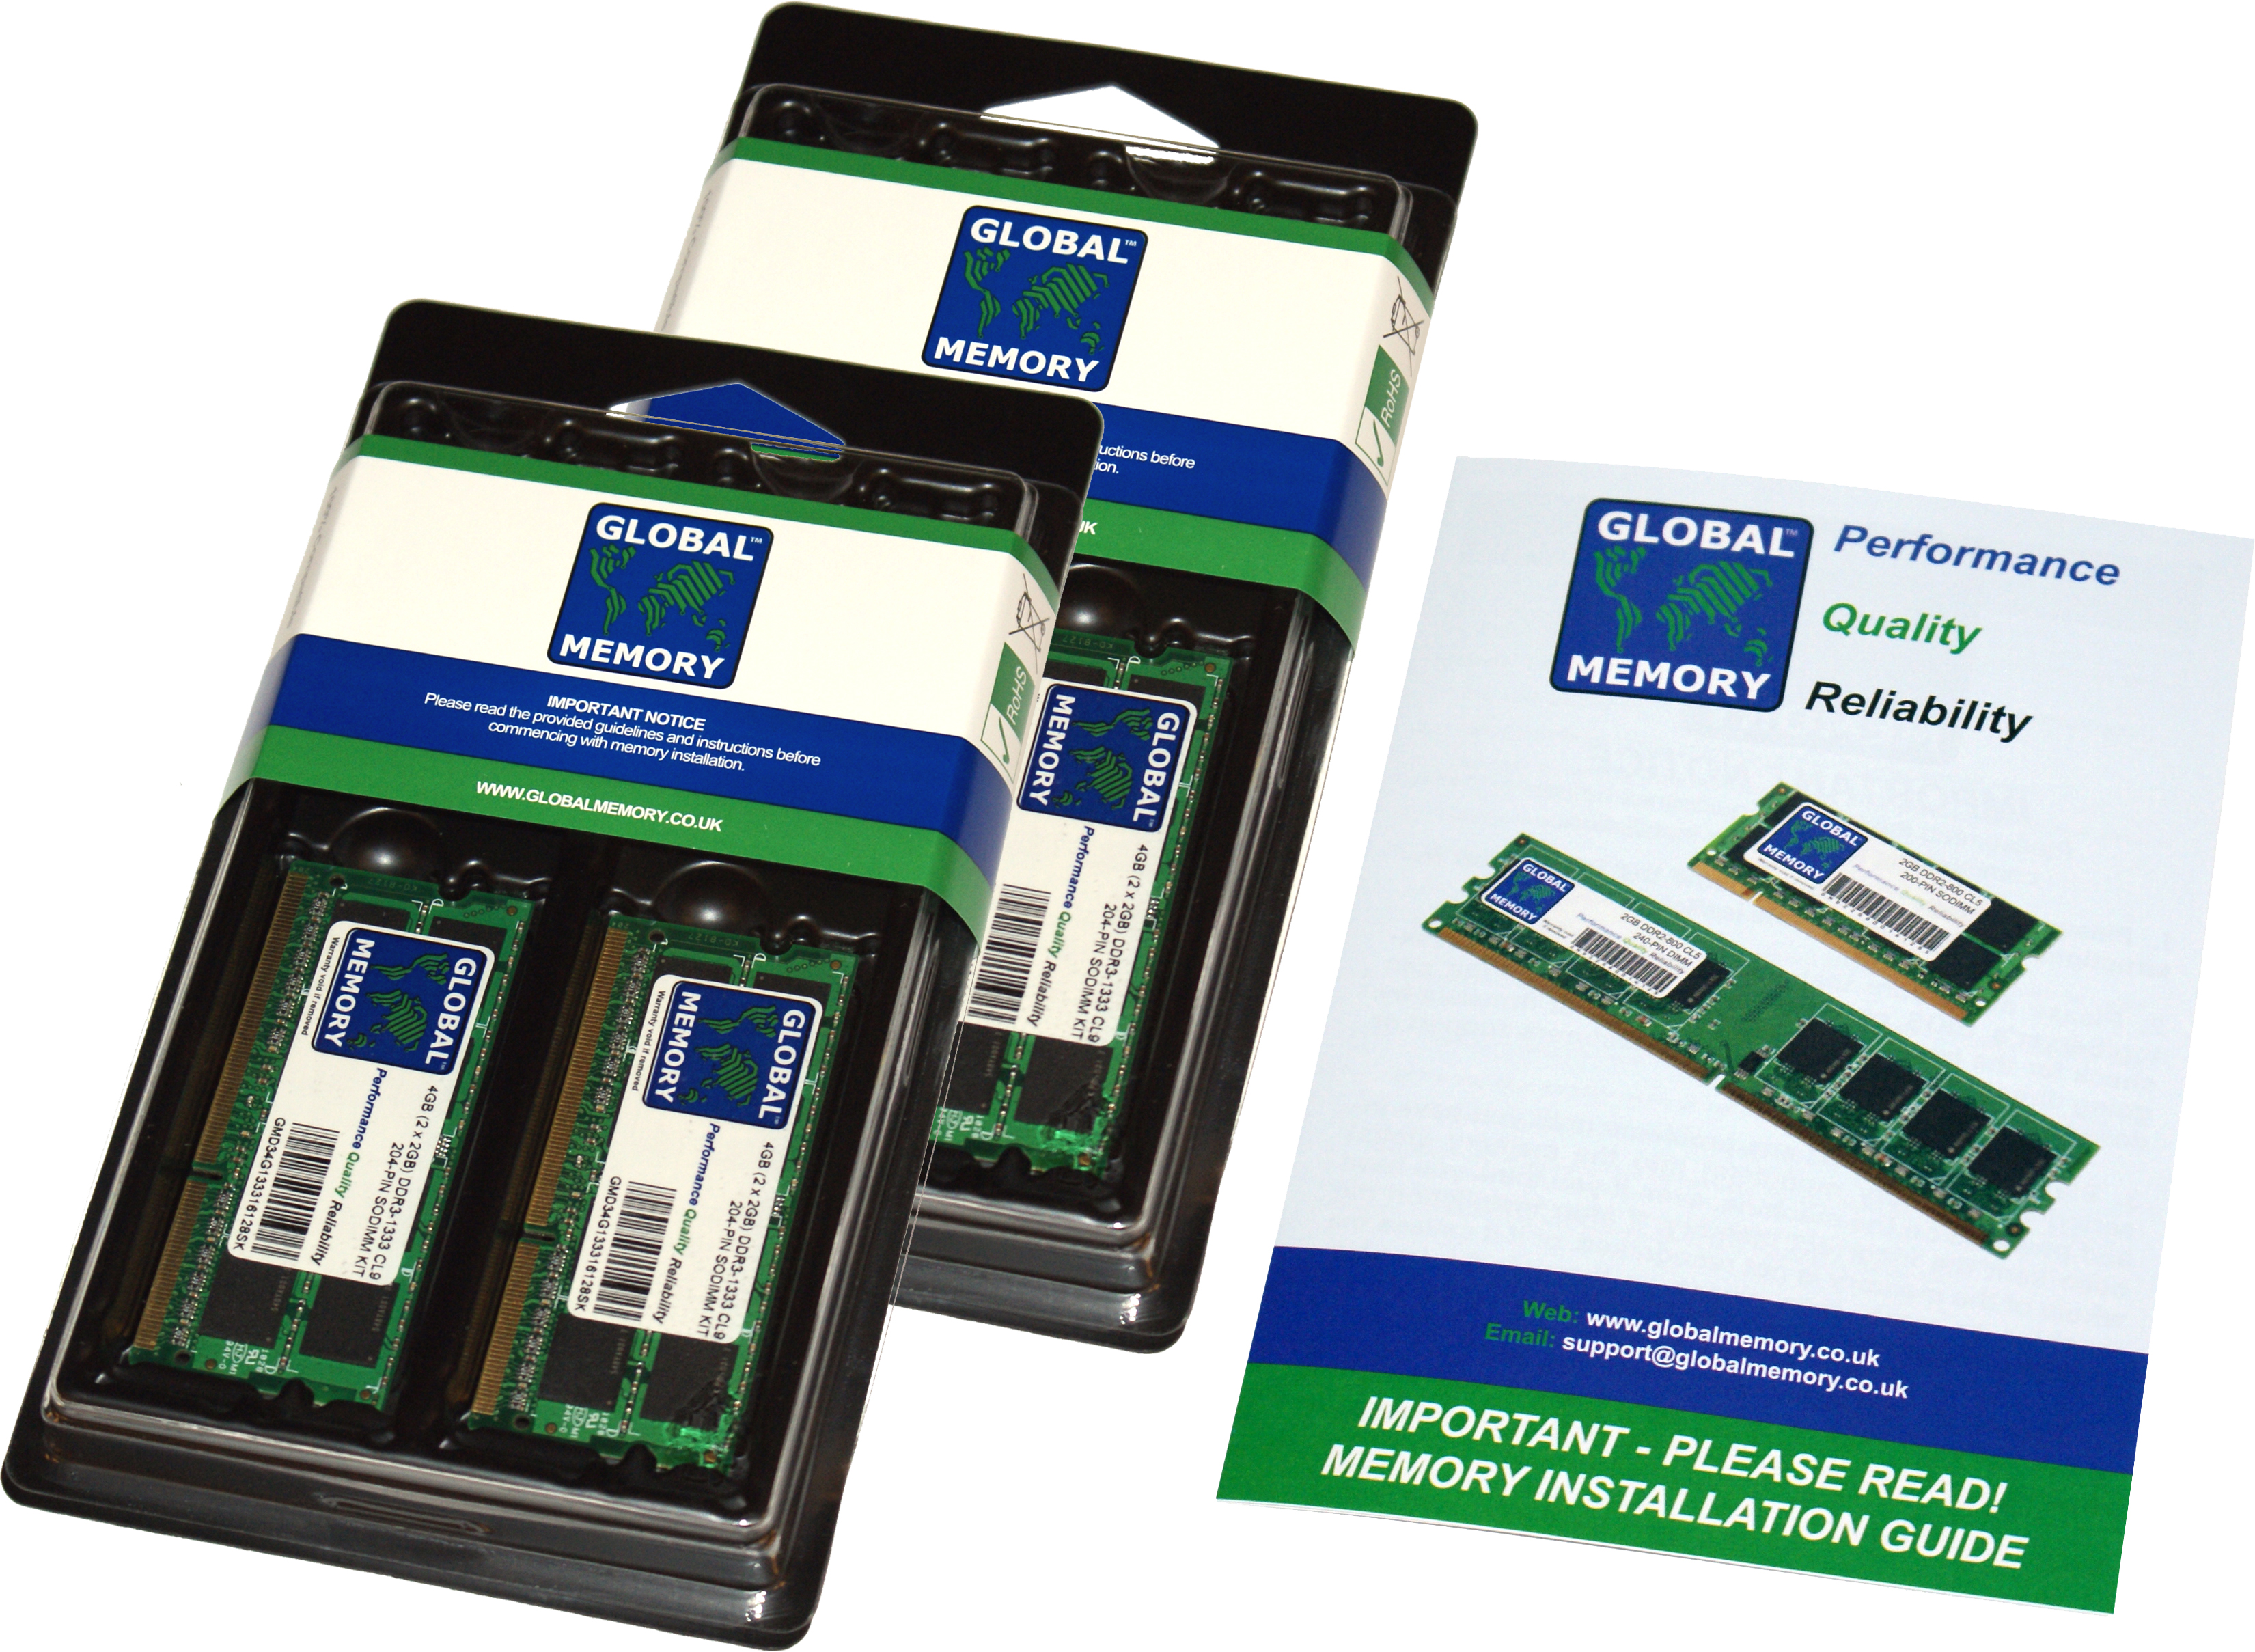 128GB (4 x 32GB) DDR4 2400MHz PC4-19200 260-PIN SODIMM MEMORY RAM KIT FOR DELL LAPTOPS/NOTEBOOKS